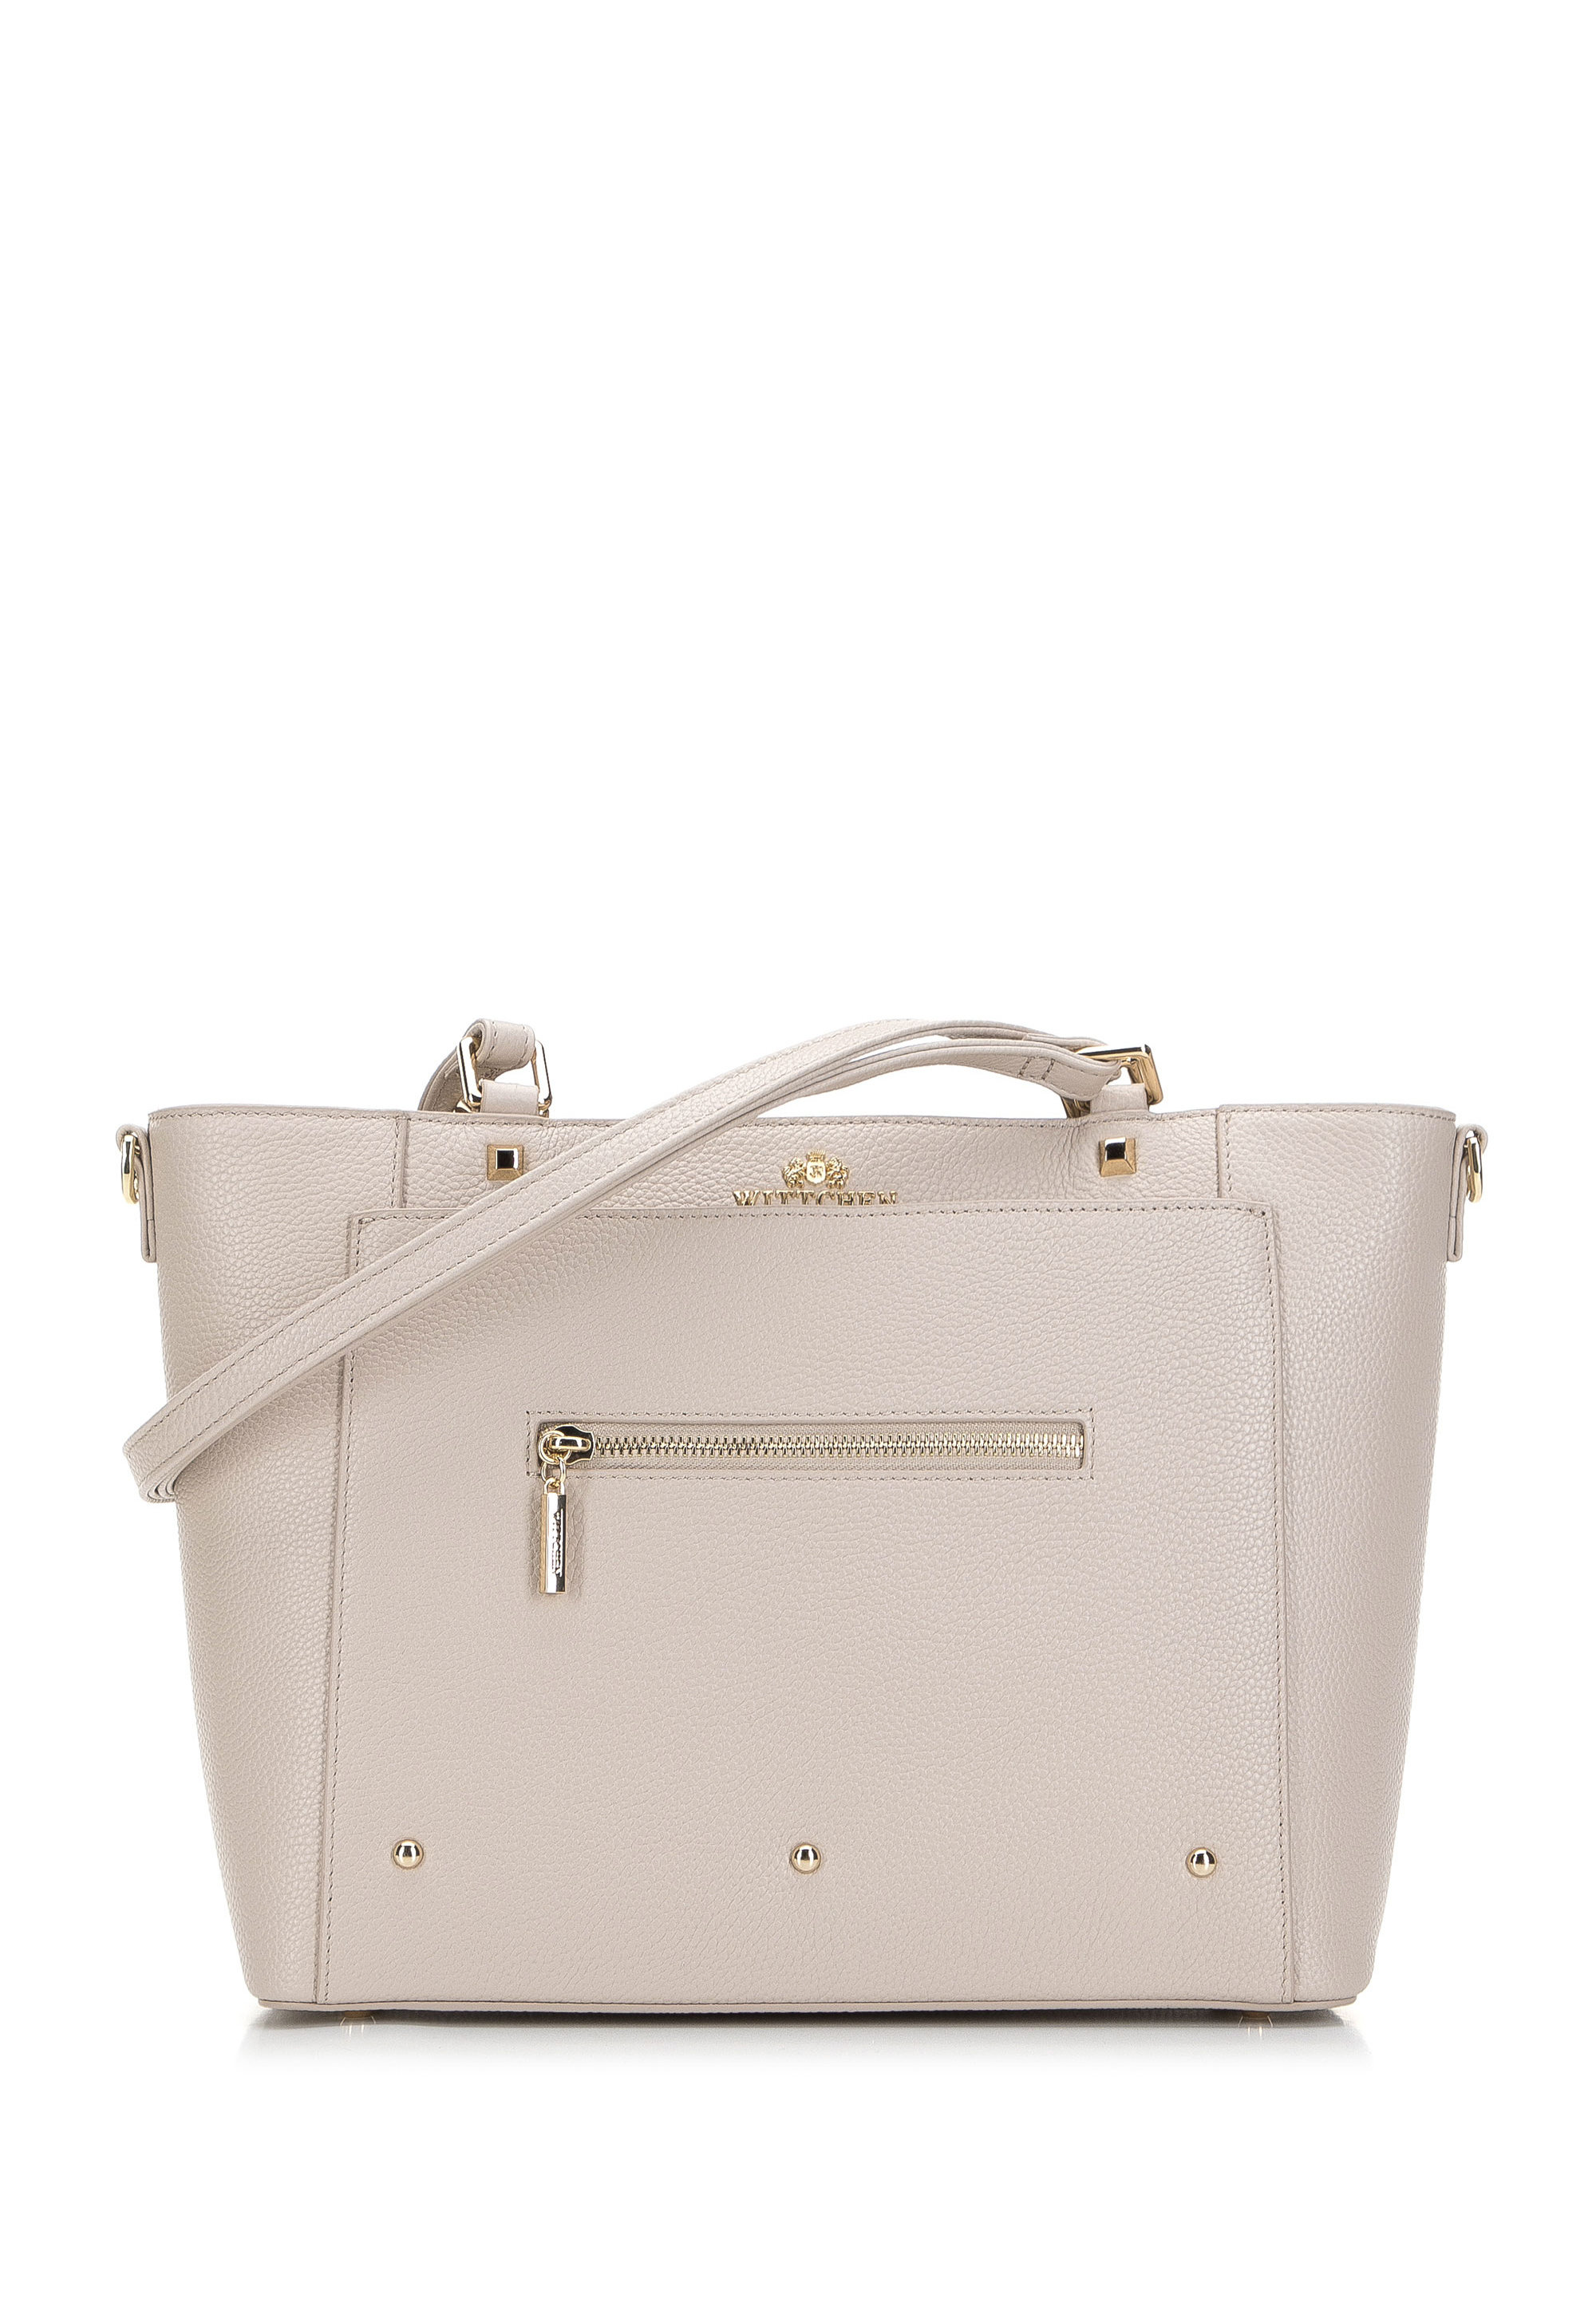 Сумка Wittchen Elegance Collection, цвет Light beige сумка женская florence collection m191 beige ут 00011252